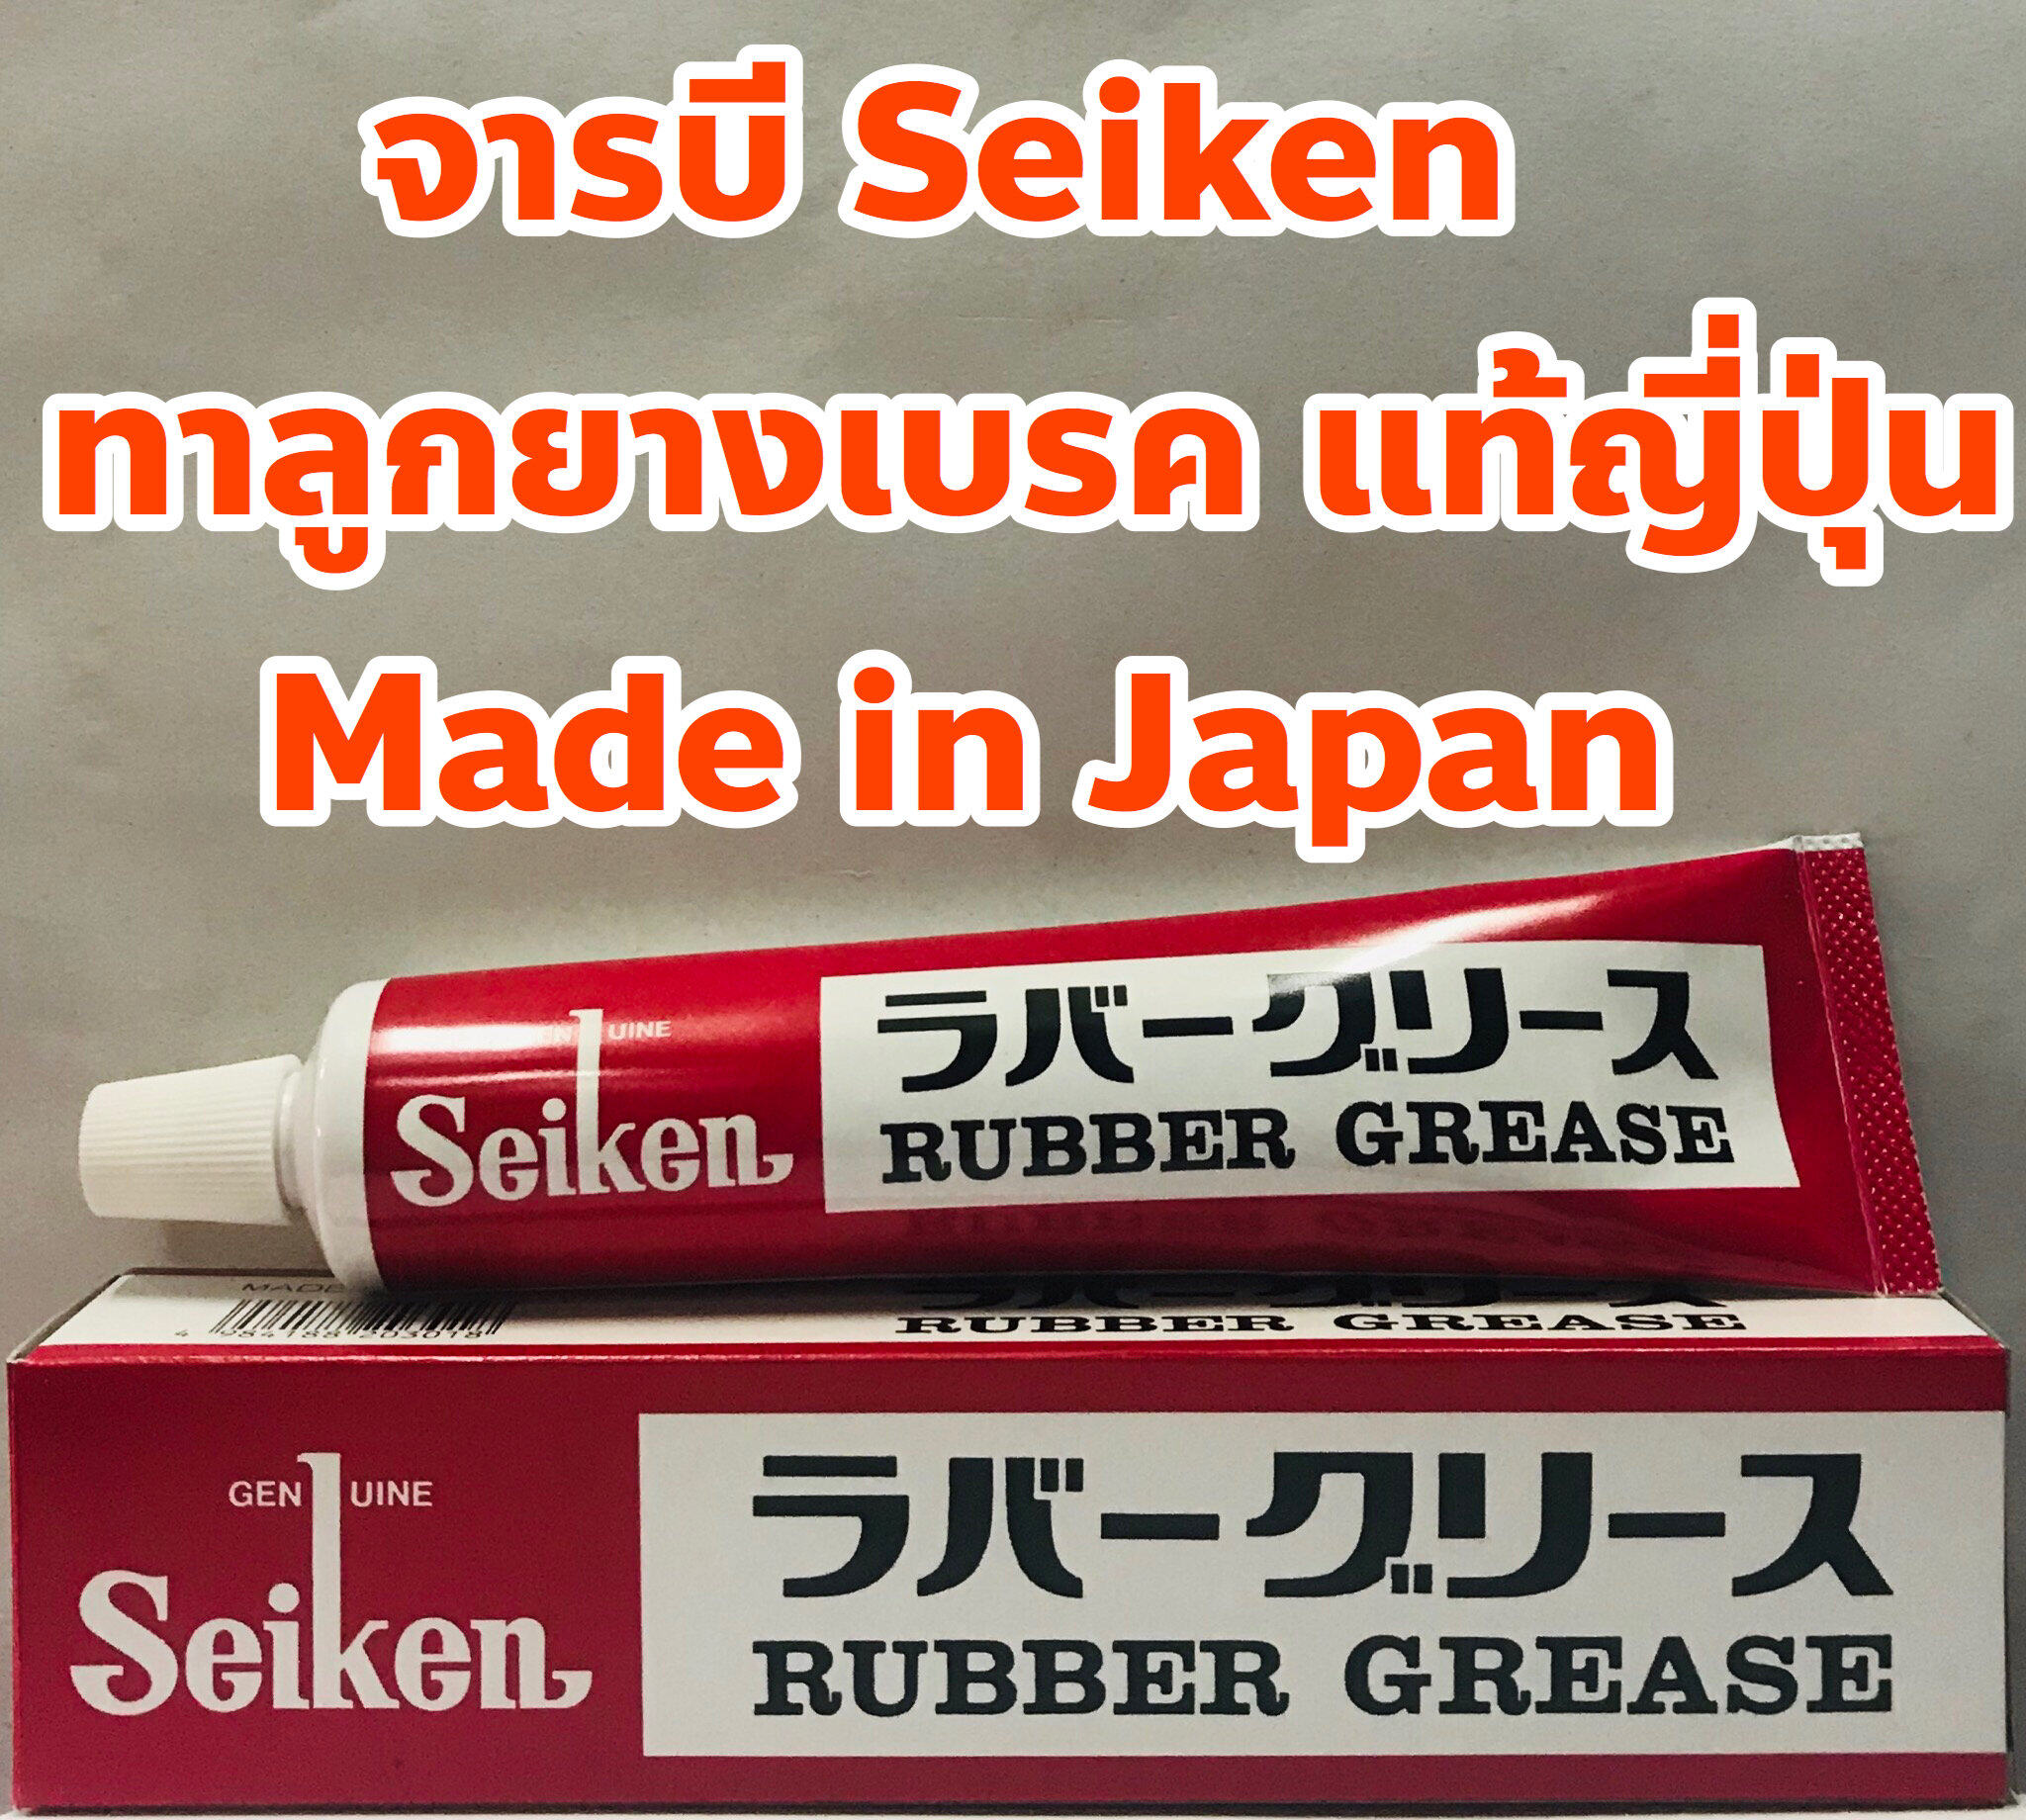 Seiken จารบี จาระบี Seiken ทาลูกยางเบรค CF301 แท้จากญี่ปุ่น Made in Japan ขนาด 100g